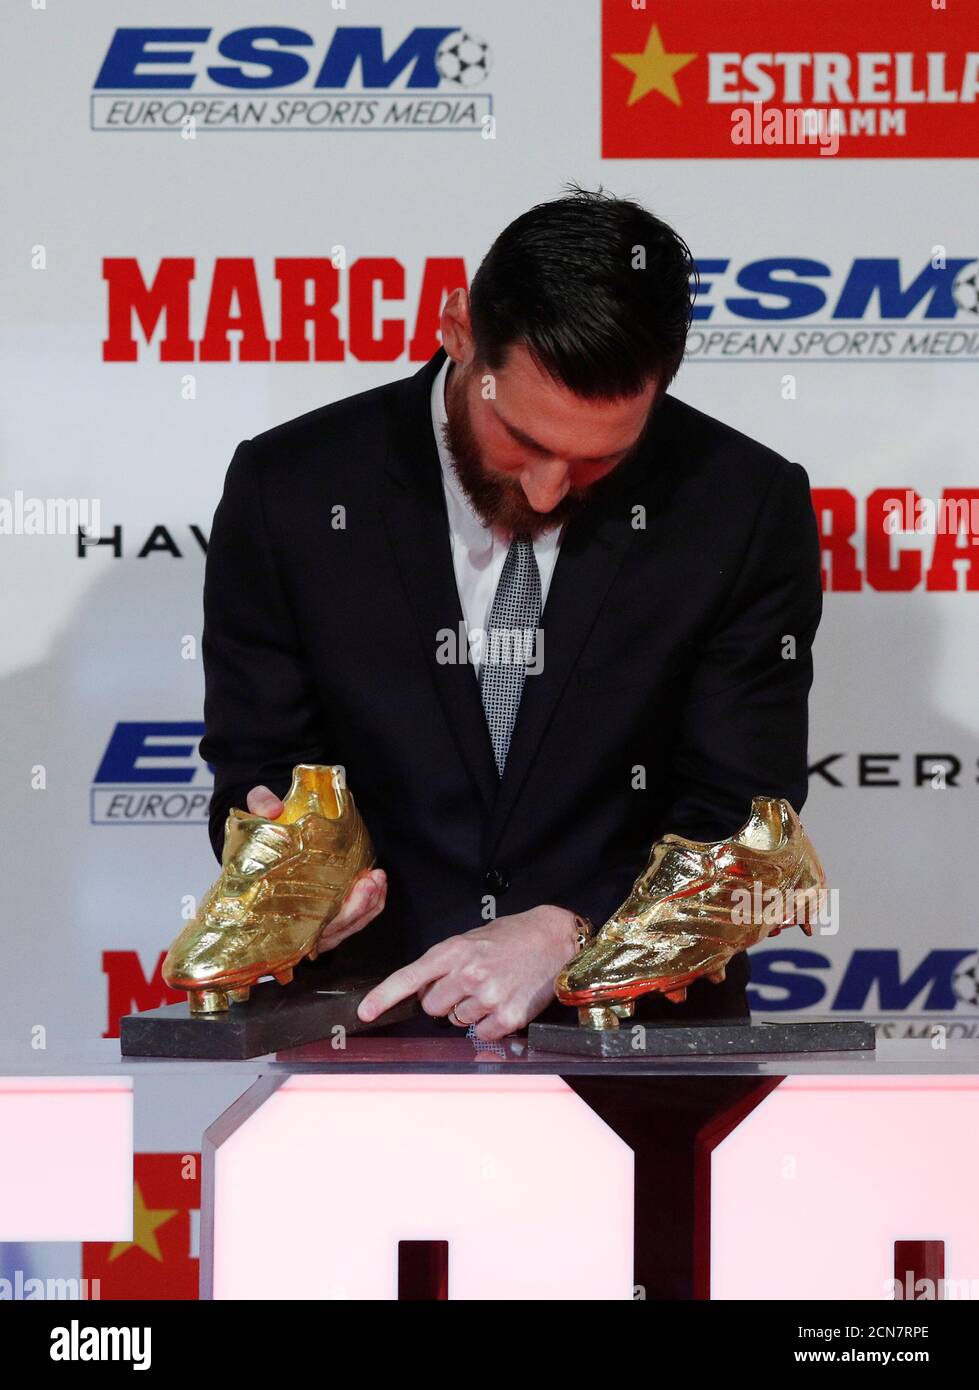 Fútbol Fútbol Lionel Messi del FC Barcelona recibe su quinto Zapato de Oro Europeo - Antiga Fabrica Estrella Damm, Barcelona, España - 18 de diciembre de 2018 Lionel Messi del